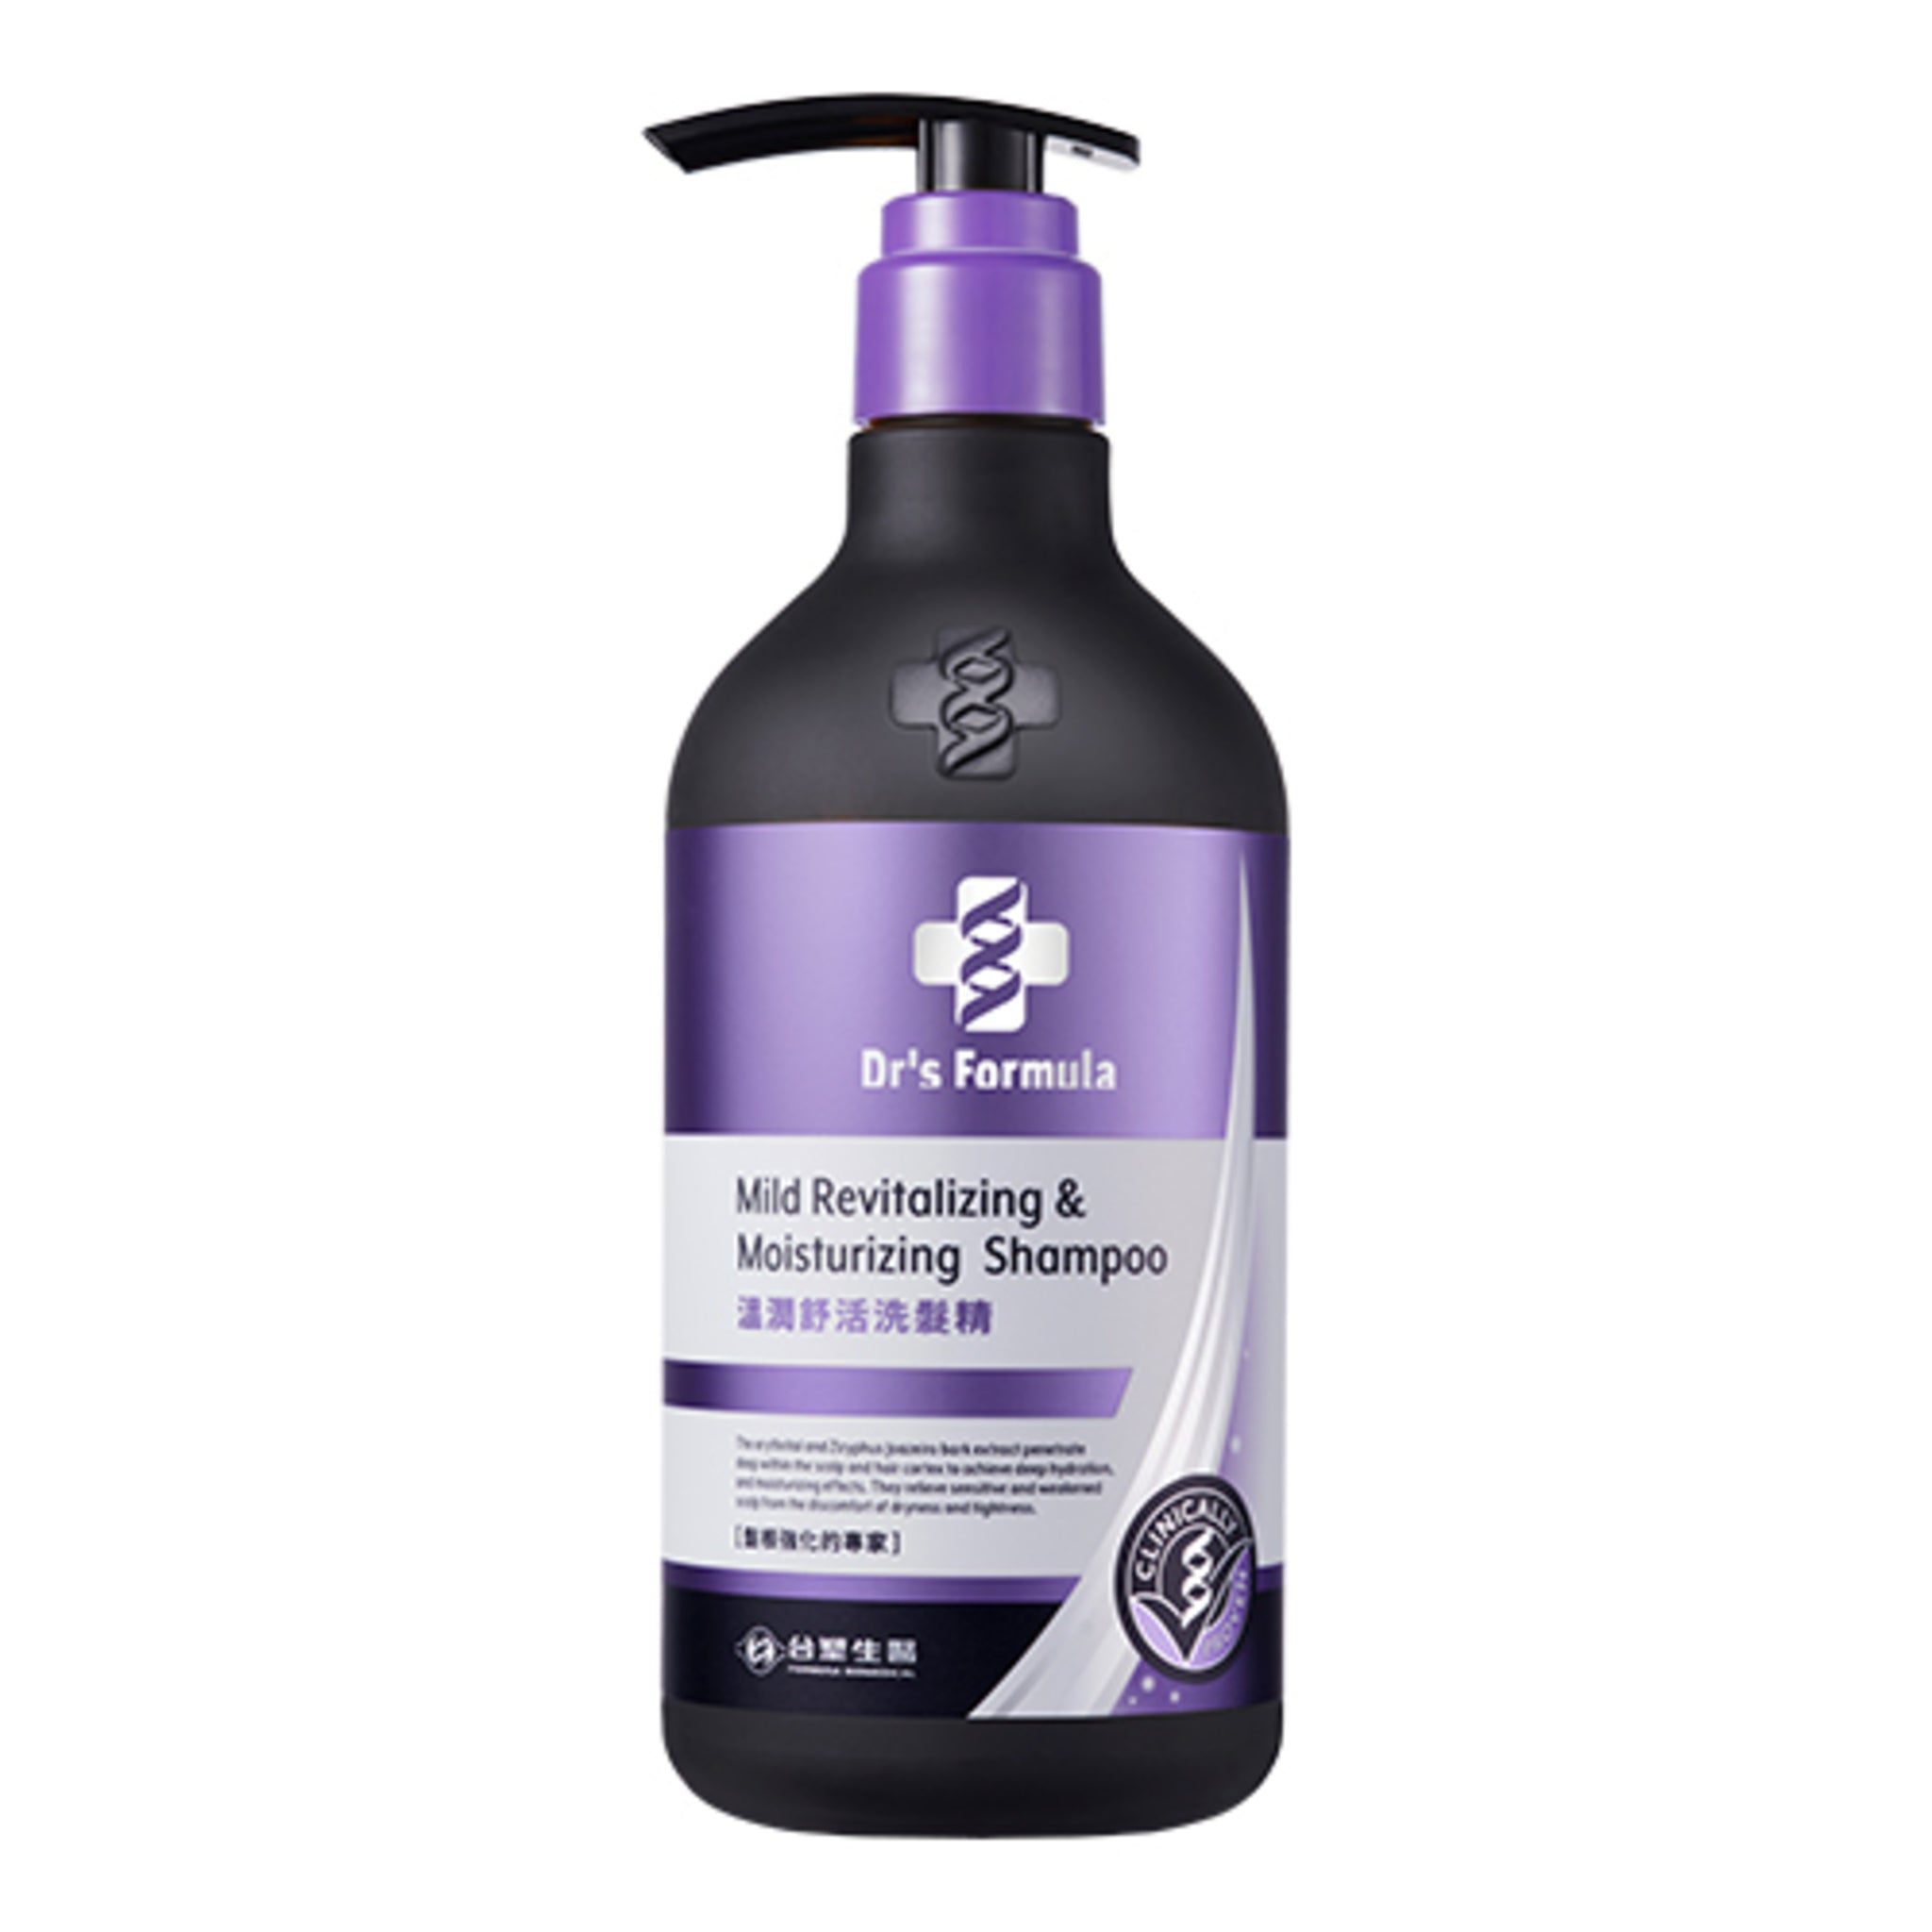 Dr's Formula Mild Revitalizing & Moisturizing Shampoo 溫潤舒活 #135767